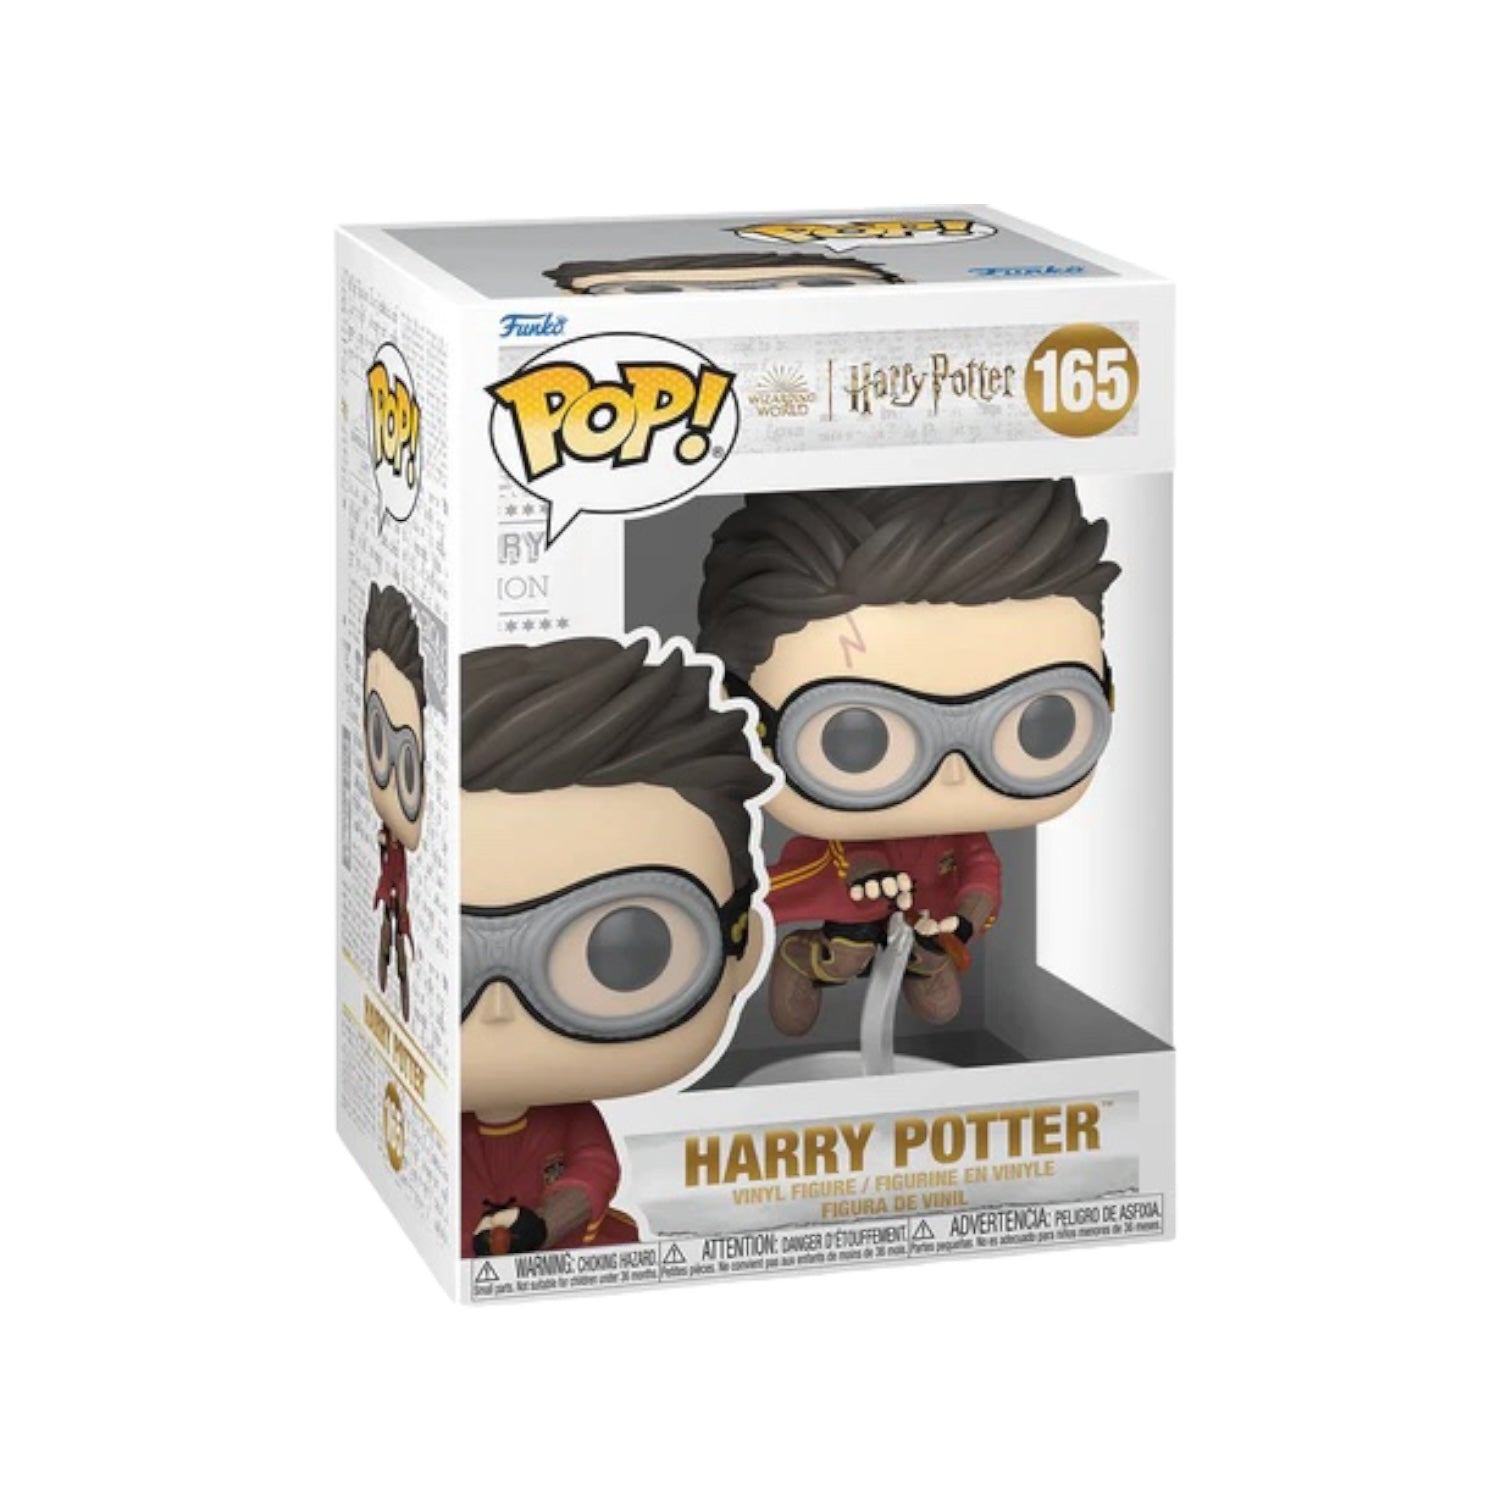 Harry Potter #165 Funko Pop! Harry Potter - PREORDER